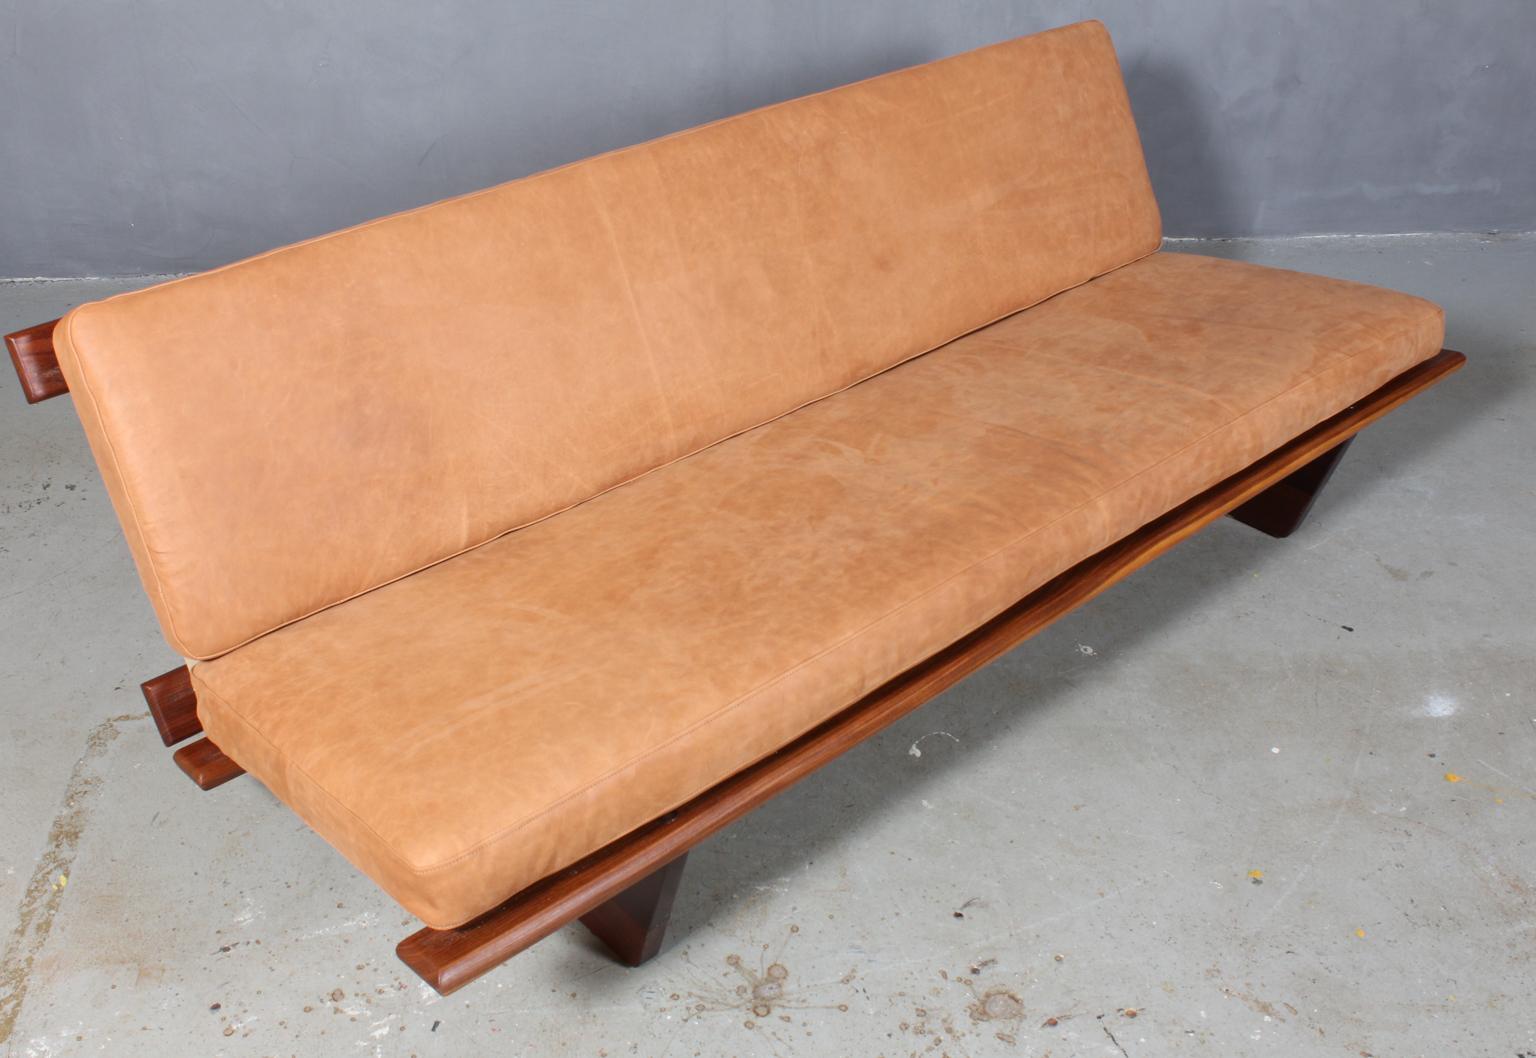 Harbo Sølvsten sofa / daybed with frame of solid teak.

New upholstered with dunes aniline leather from Arne Sørensen. New rubber webbing.

Model Tivoli DF-22.